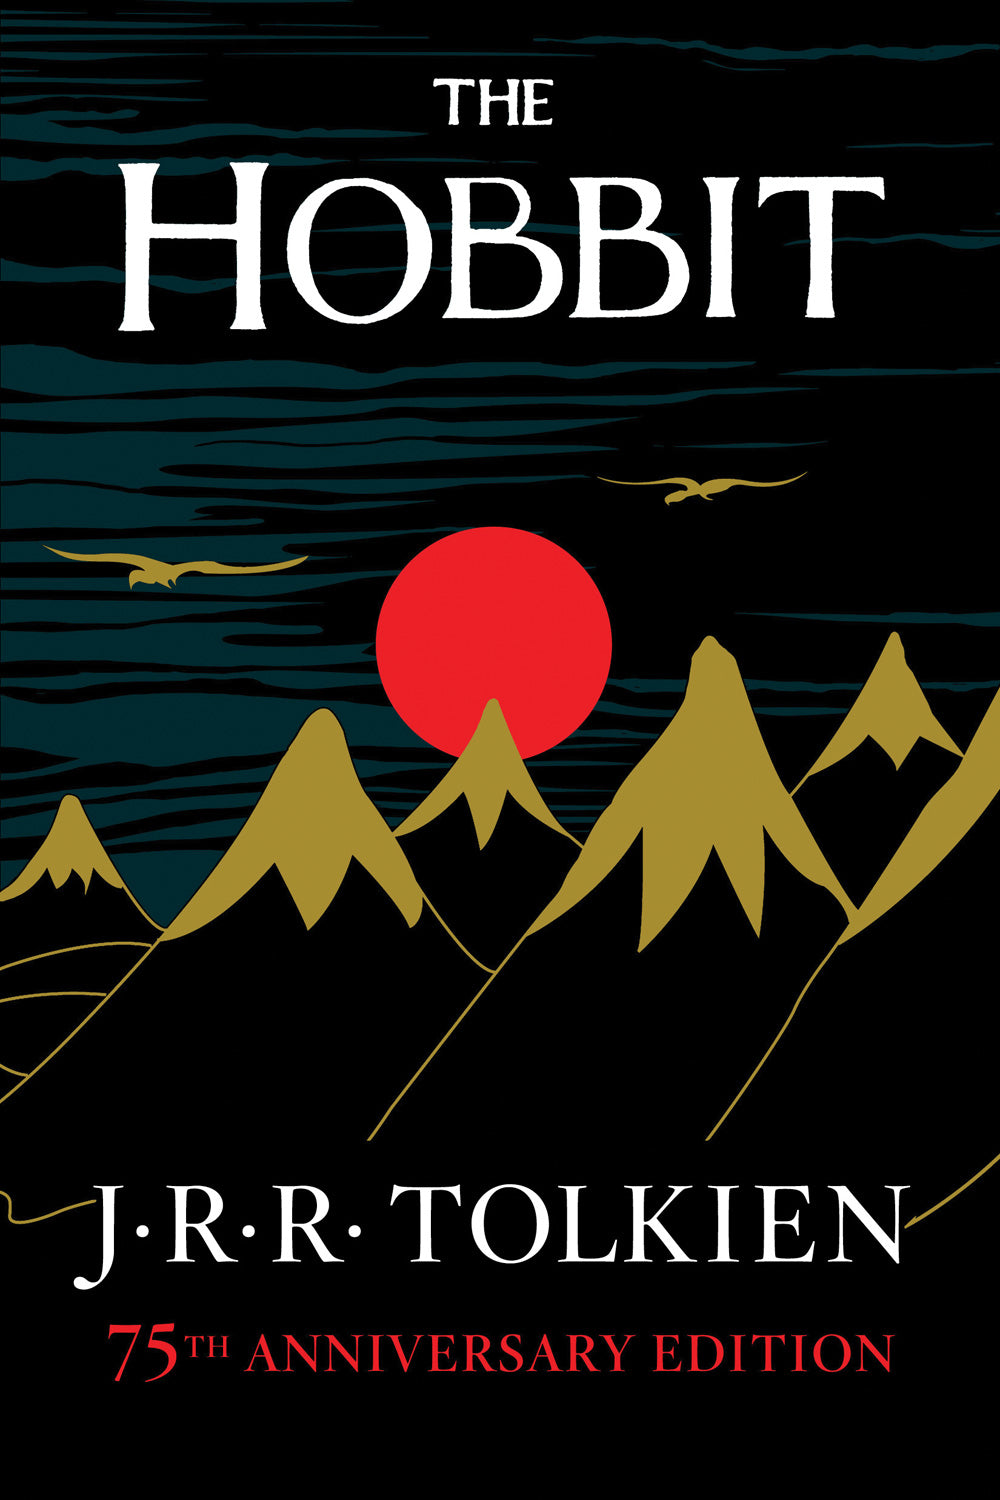 The Hobbit by J.R.R. Tolkien - tpbk